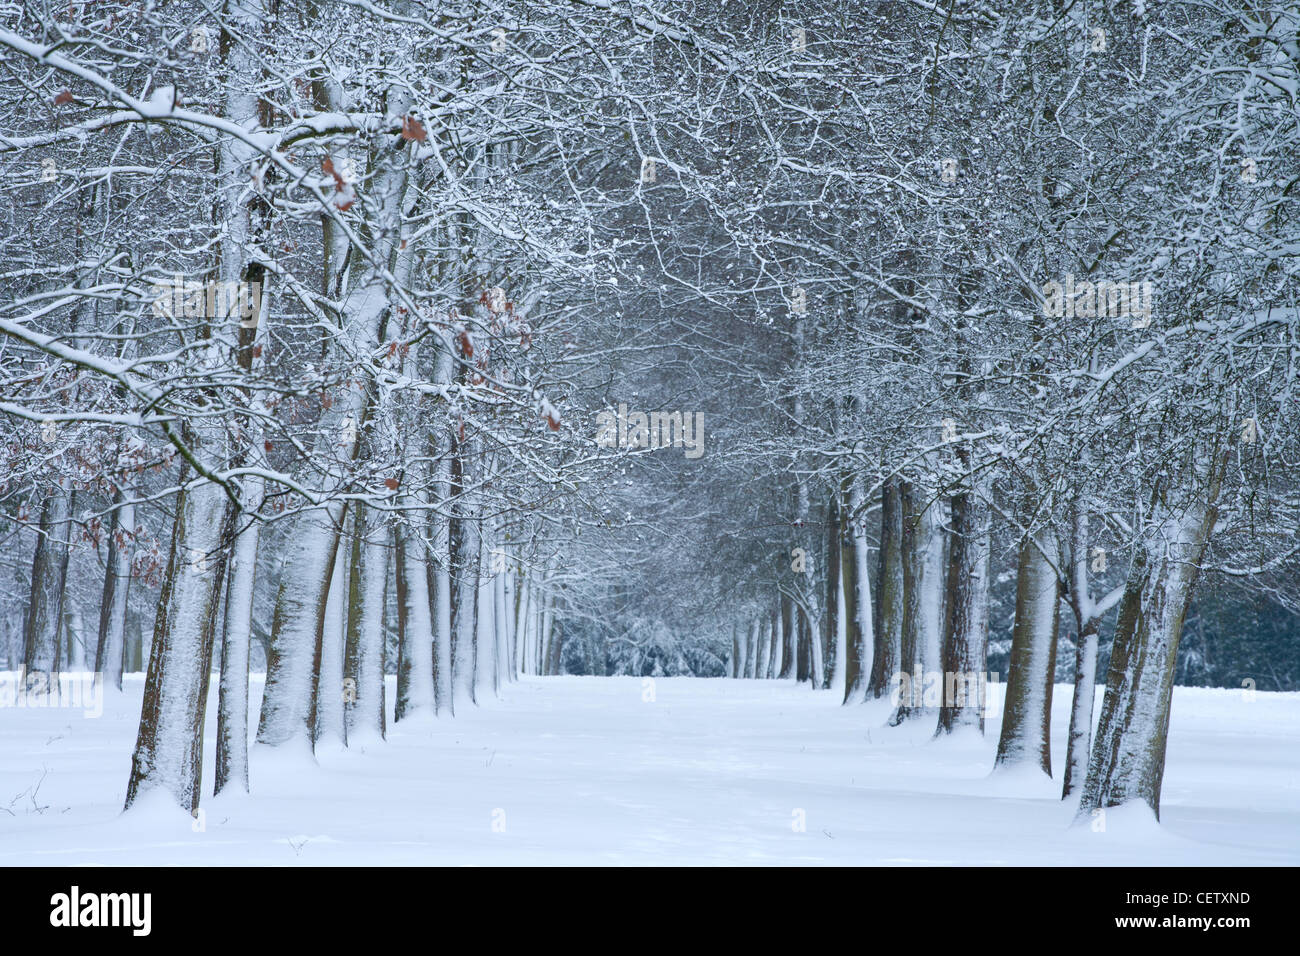 Avenue of snowy trees the backs Cambridge snow winter wonderland Stock Photo